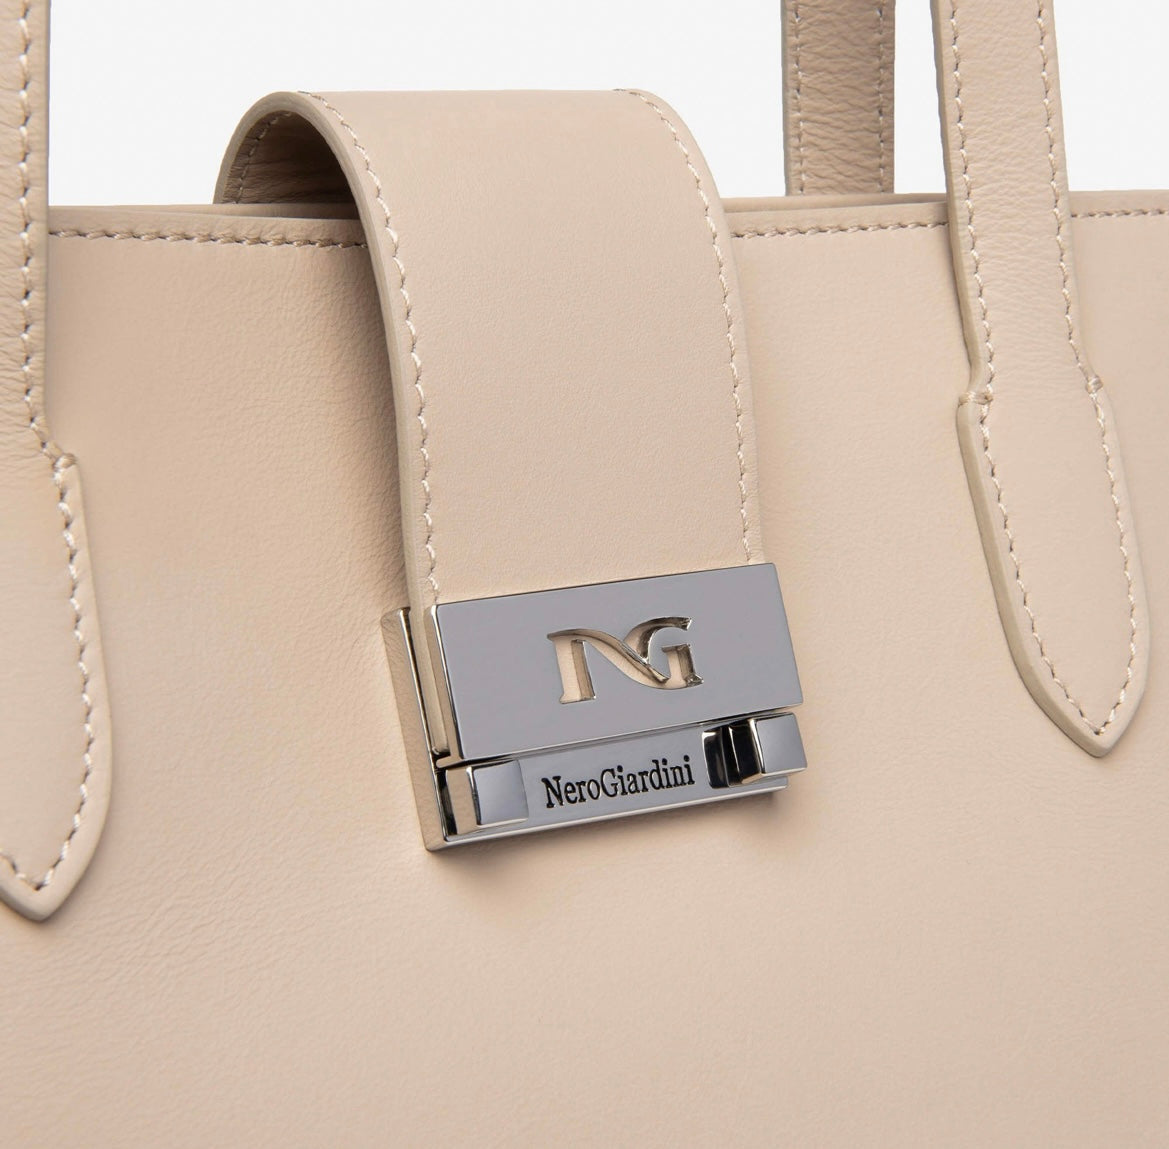 Nerogiardini leather shoulder bag